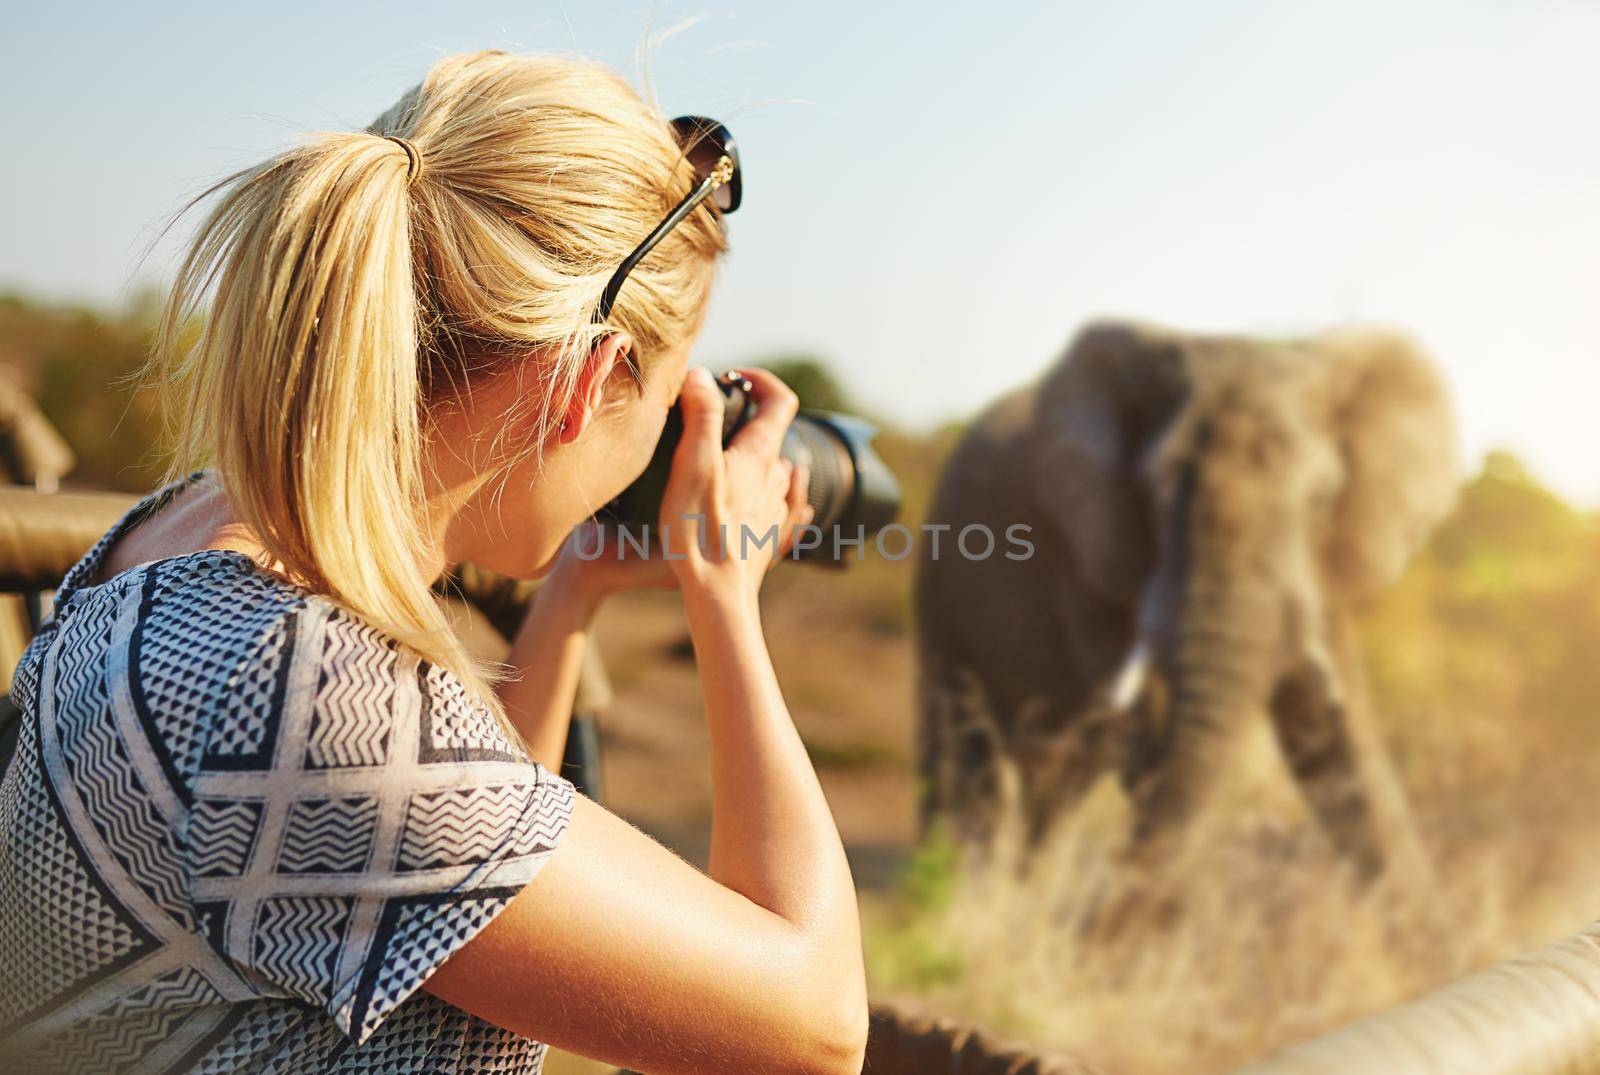 Cropped shot of a female tourist taking photographs of elephants while on safari.